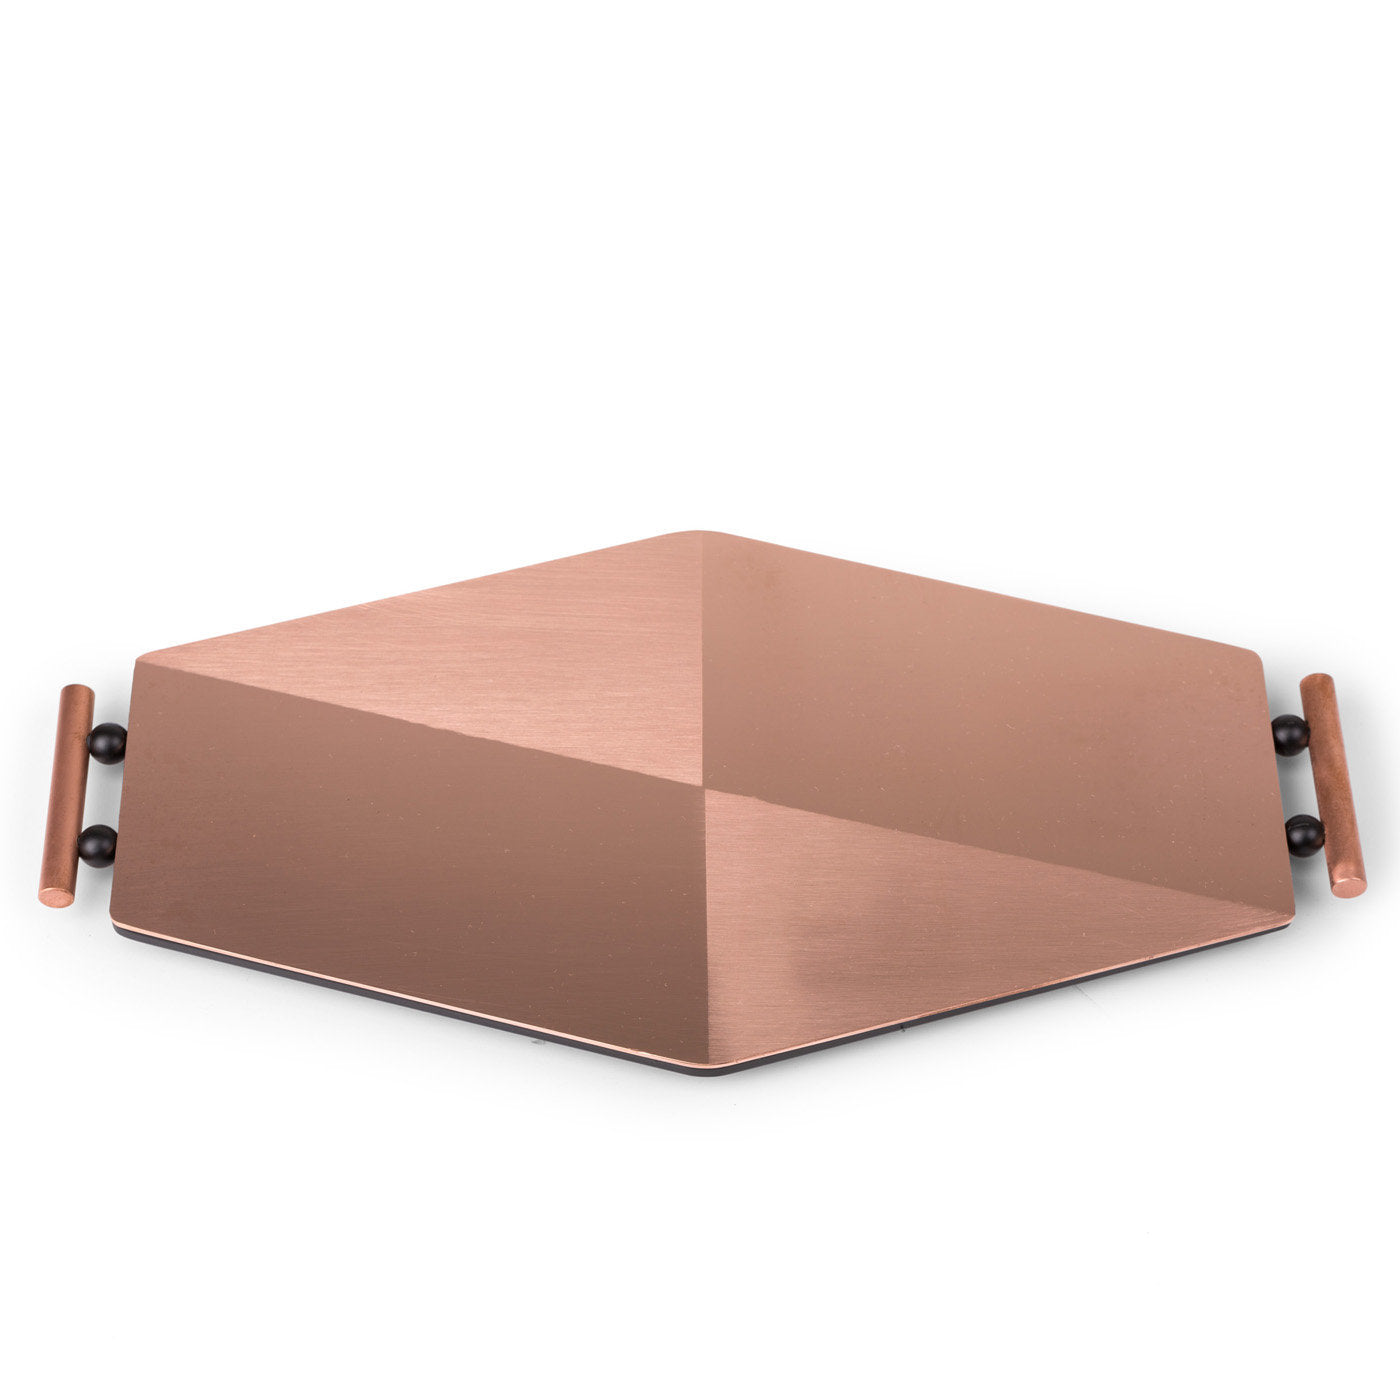 Satin Hexagonal Copper Tray - Alternative view 1